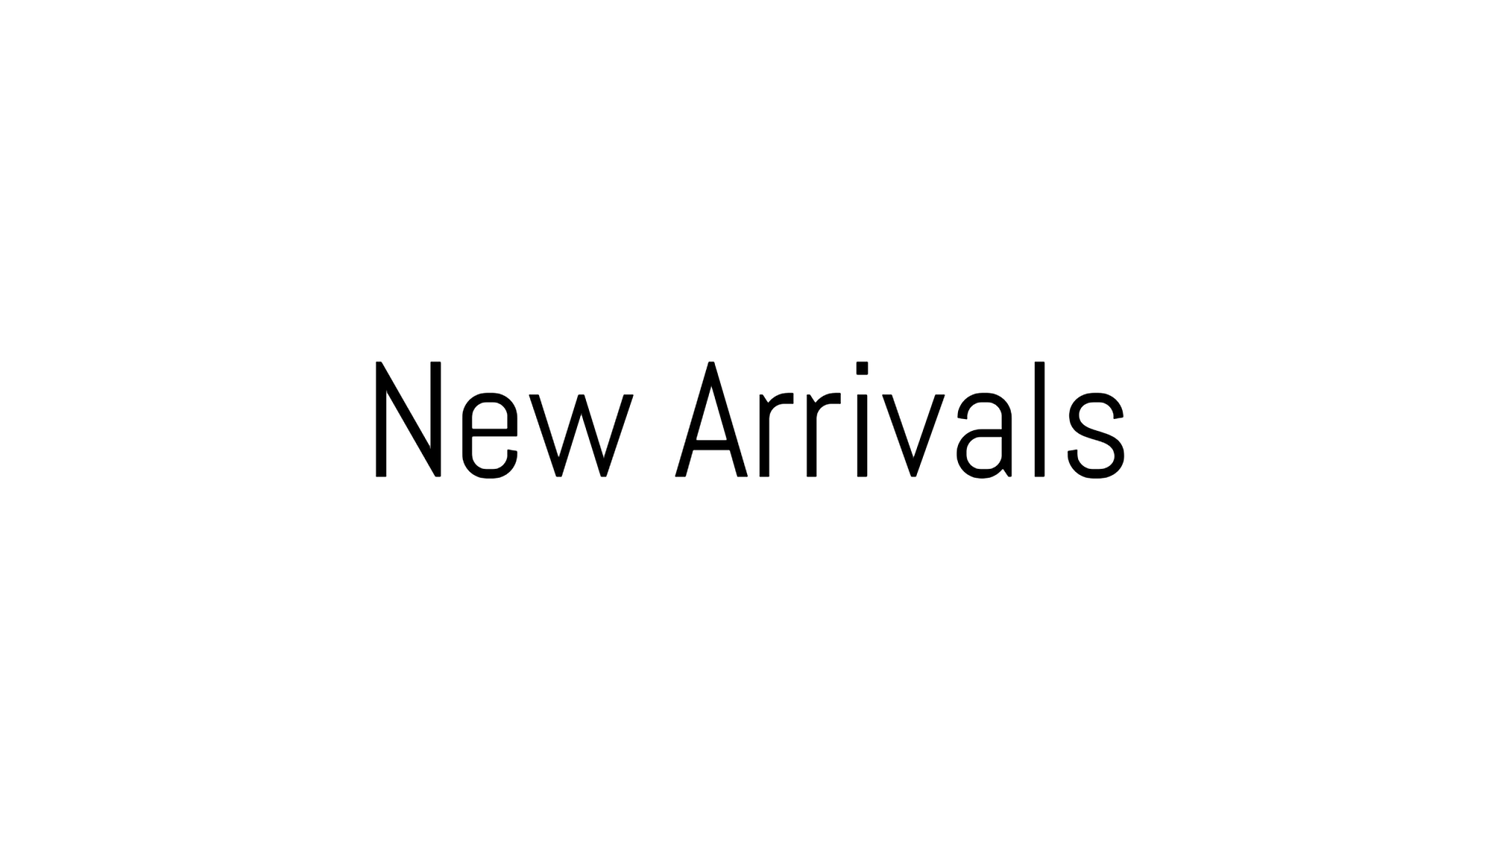 New arrivals - Bonotee